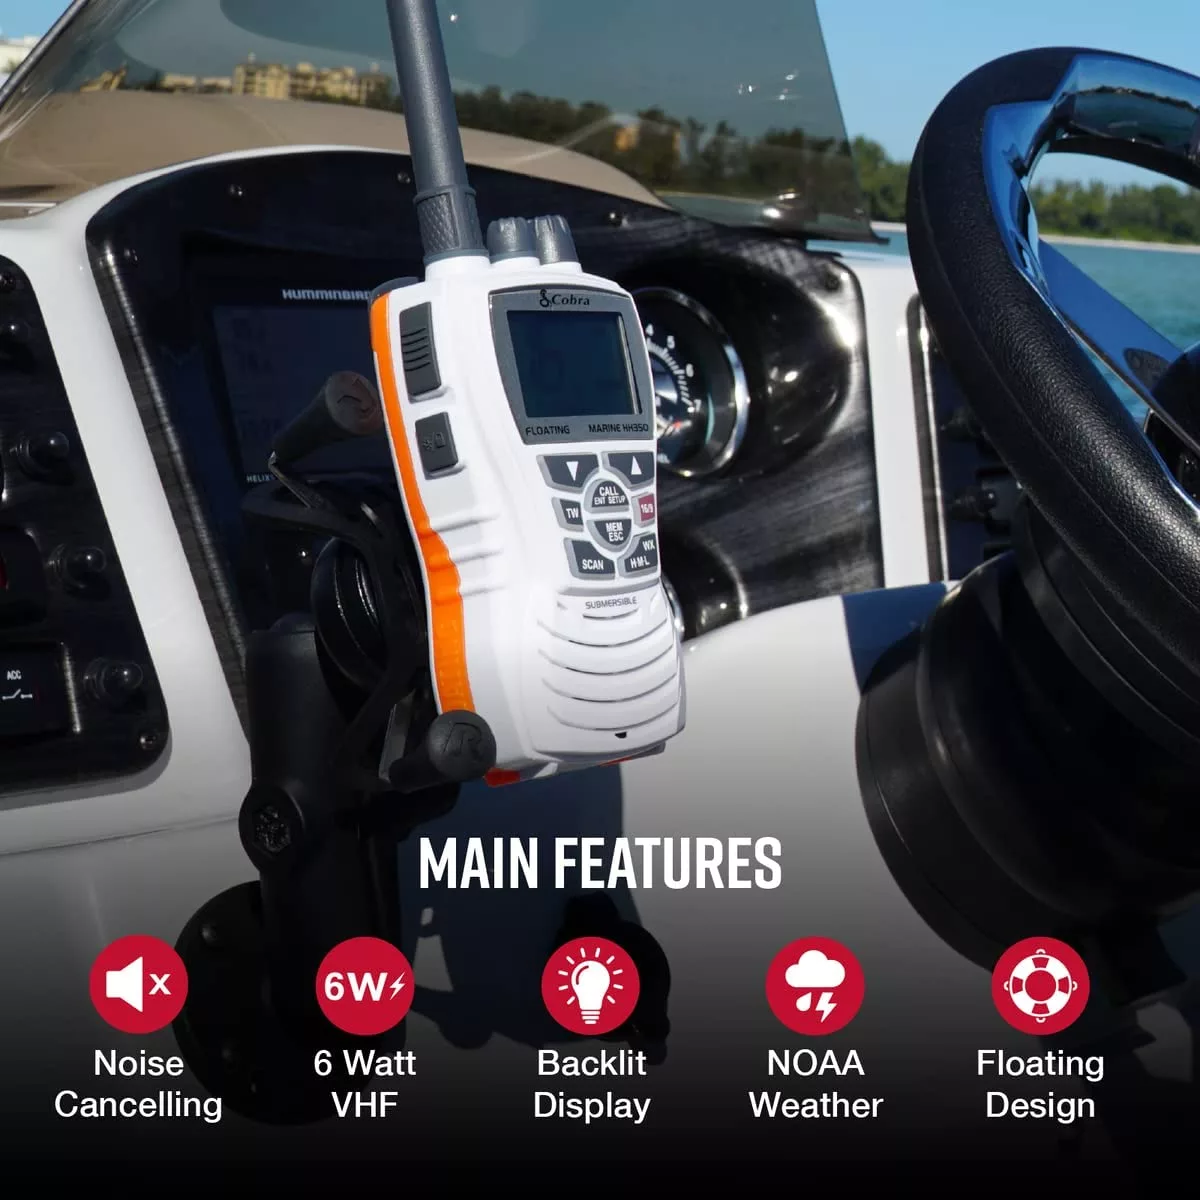 Cobra Handheld Floating VHF Radio Product Features